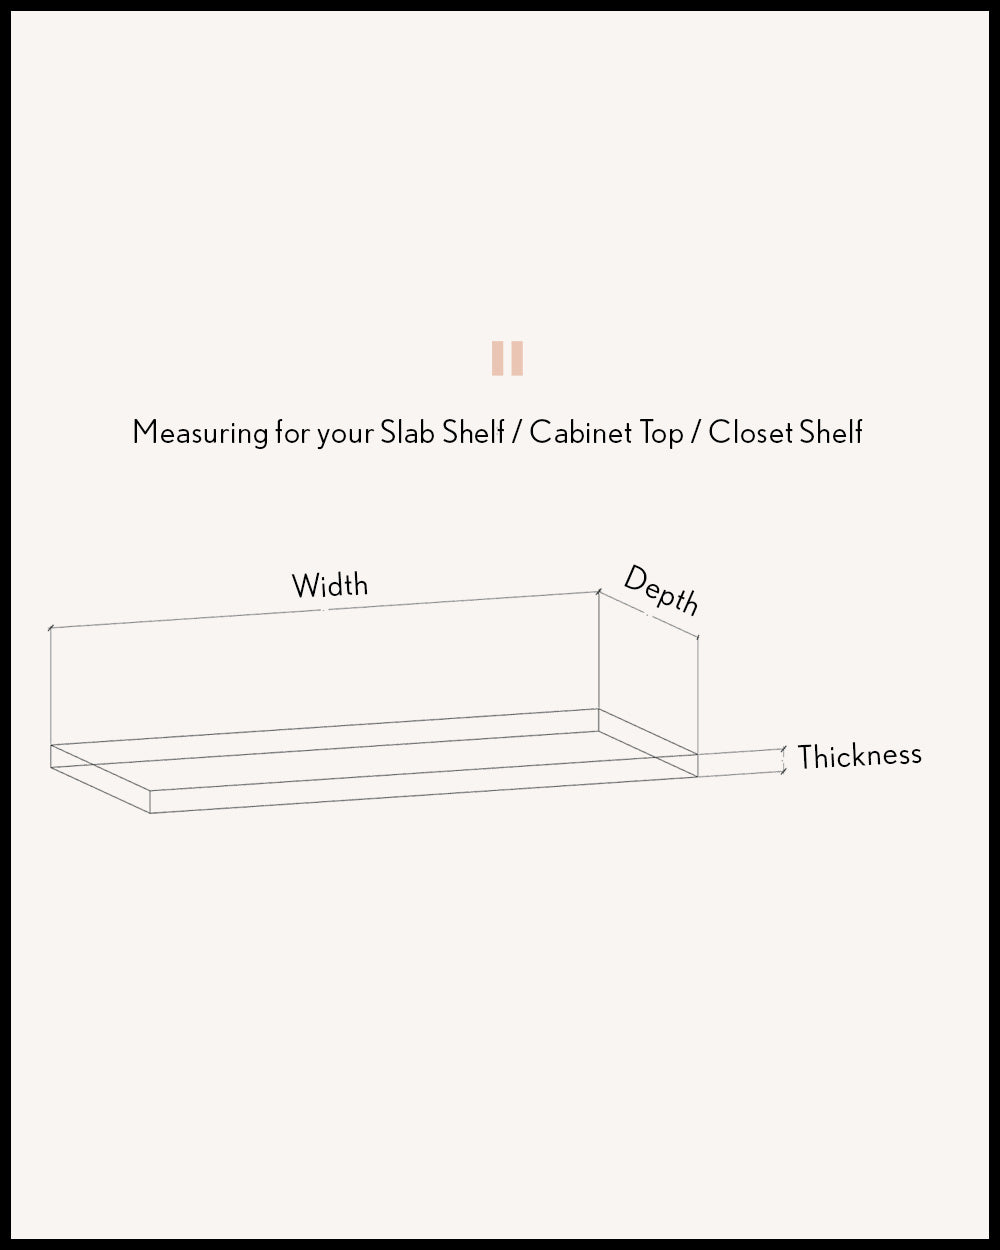 Teak 2-4" thick Cabinet Top / Slab Shelf